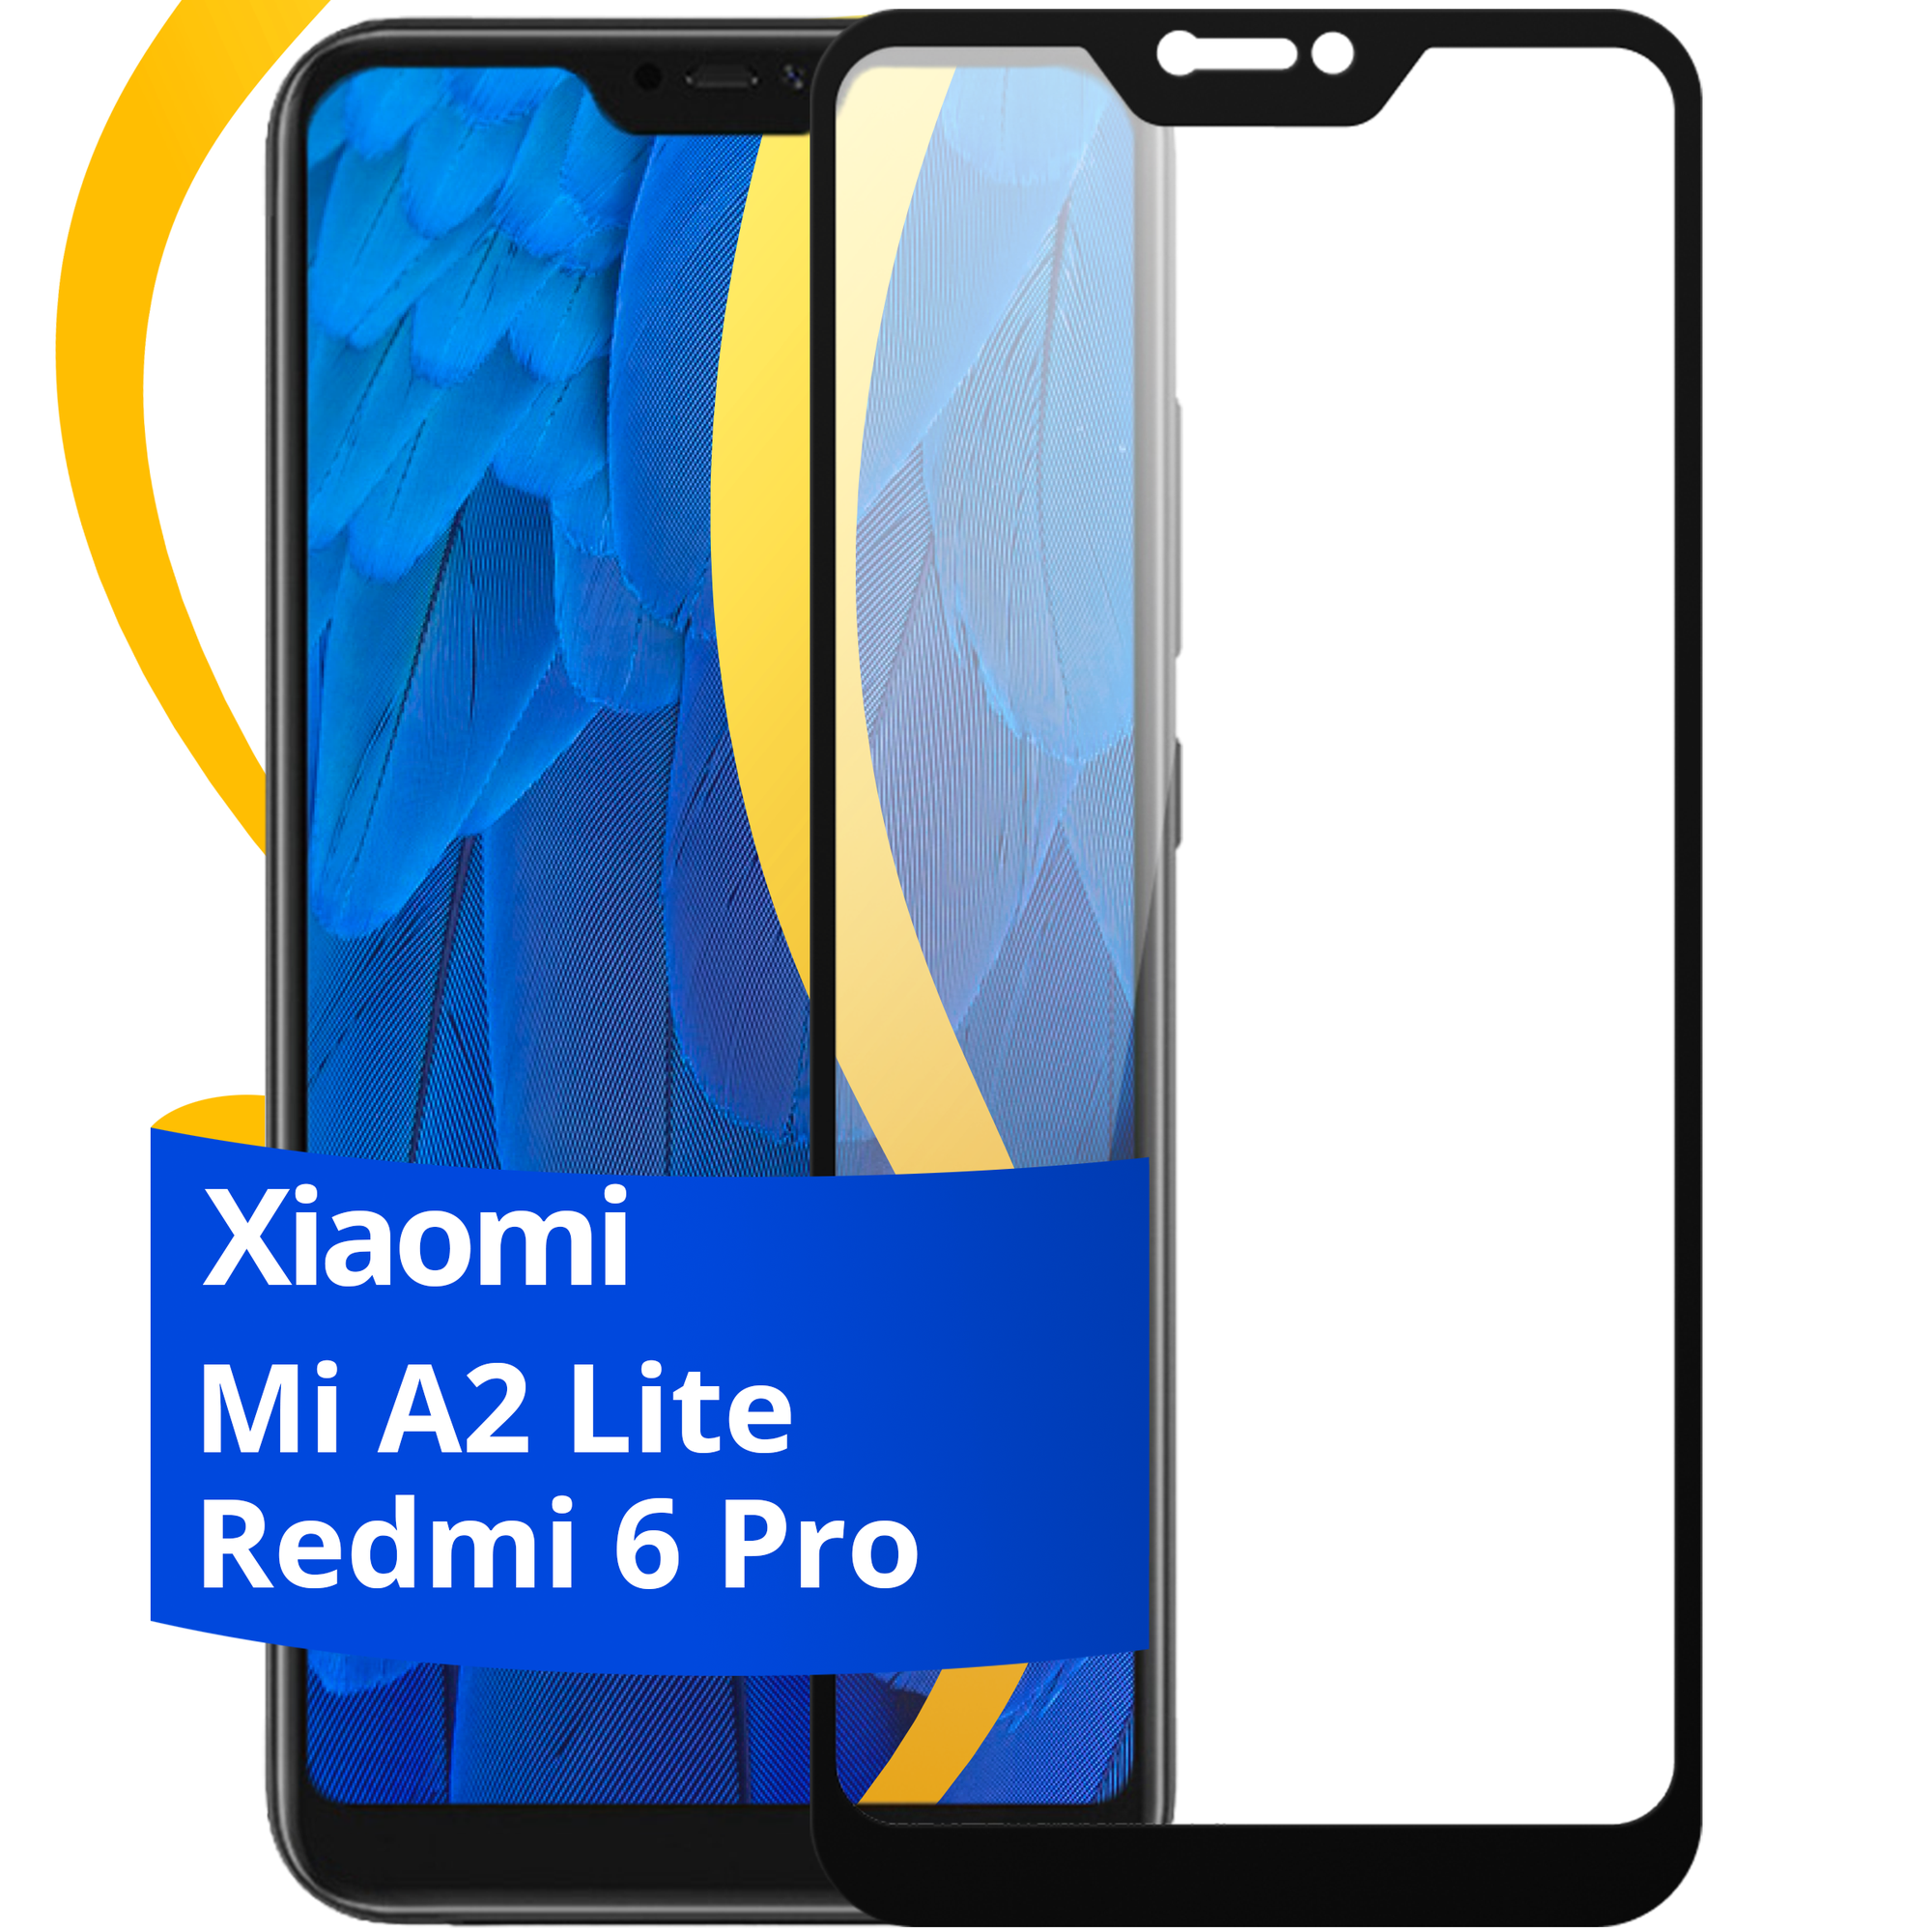 Глянцевое защитное стекло для телефона Xiaomi Mi A2 Lite и Redmi 6 Pro / Противоударное стекло на cмартфон Сяоми Ми А2 Лайт и Редми 6 Про